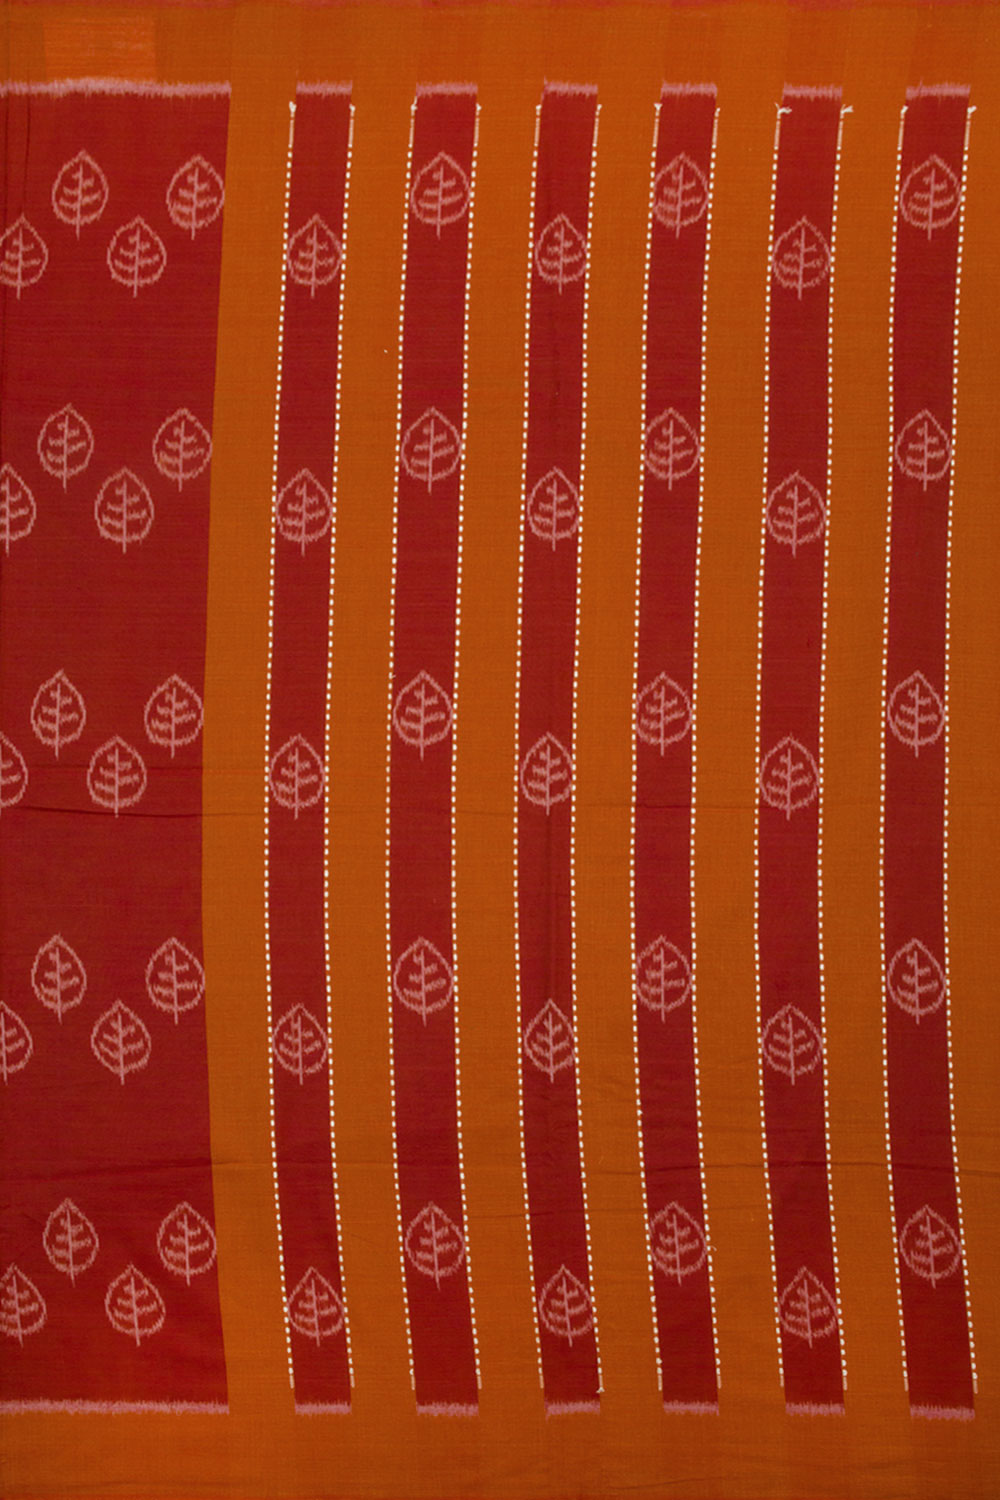 Red Handloom Odisha Ikat Cotton Saree 10060317